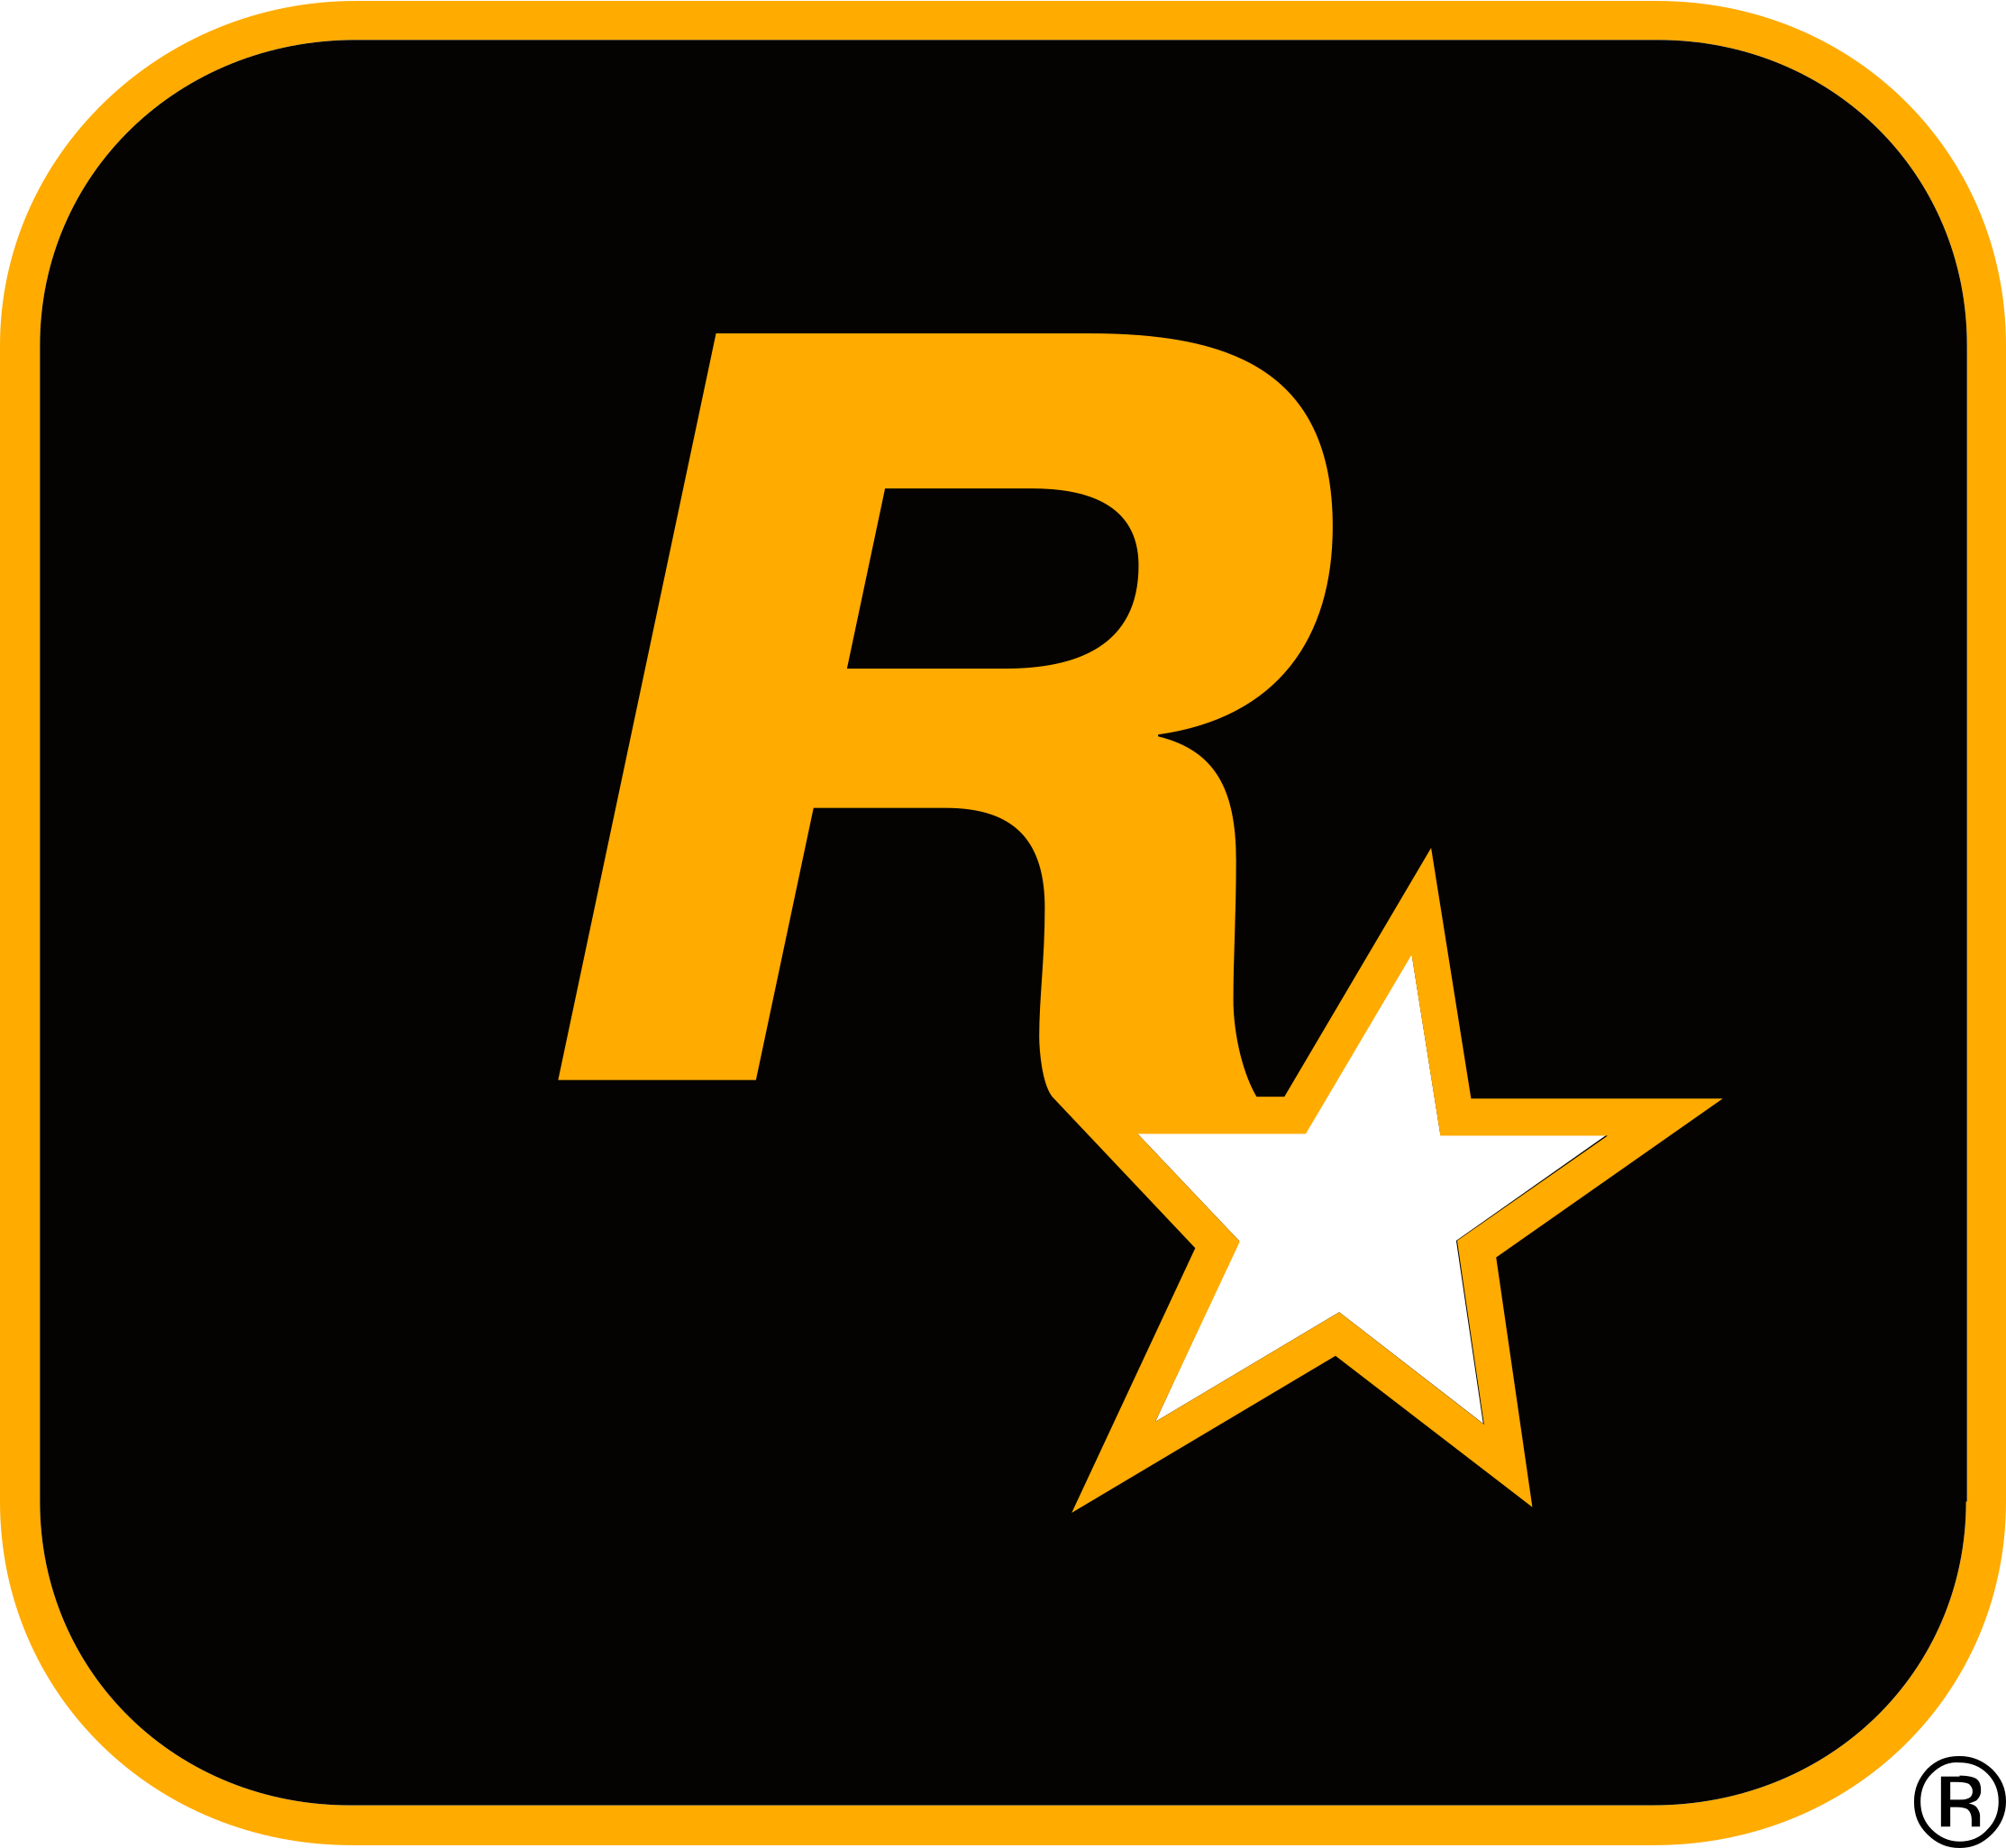 File:Grand Theft Auto San Andreas logo.svg - Wikimedia Commons